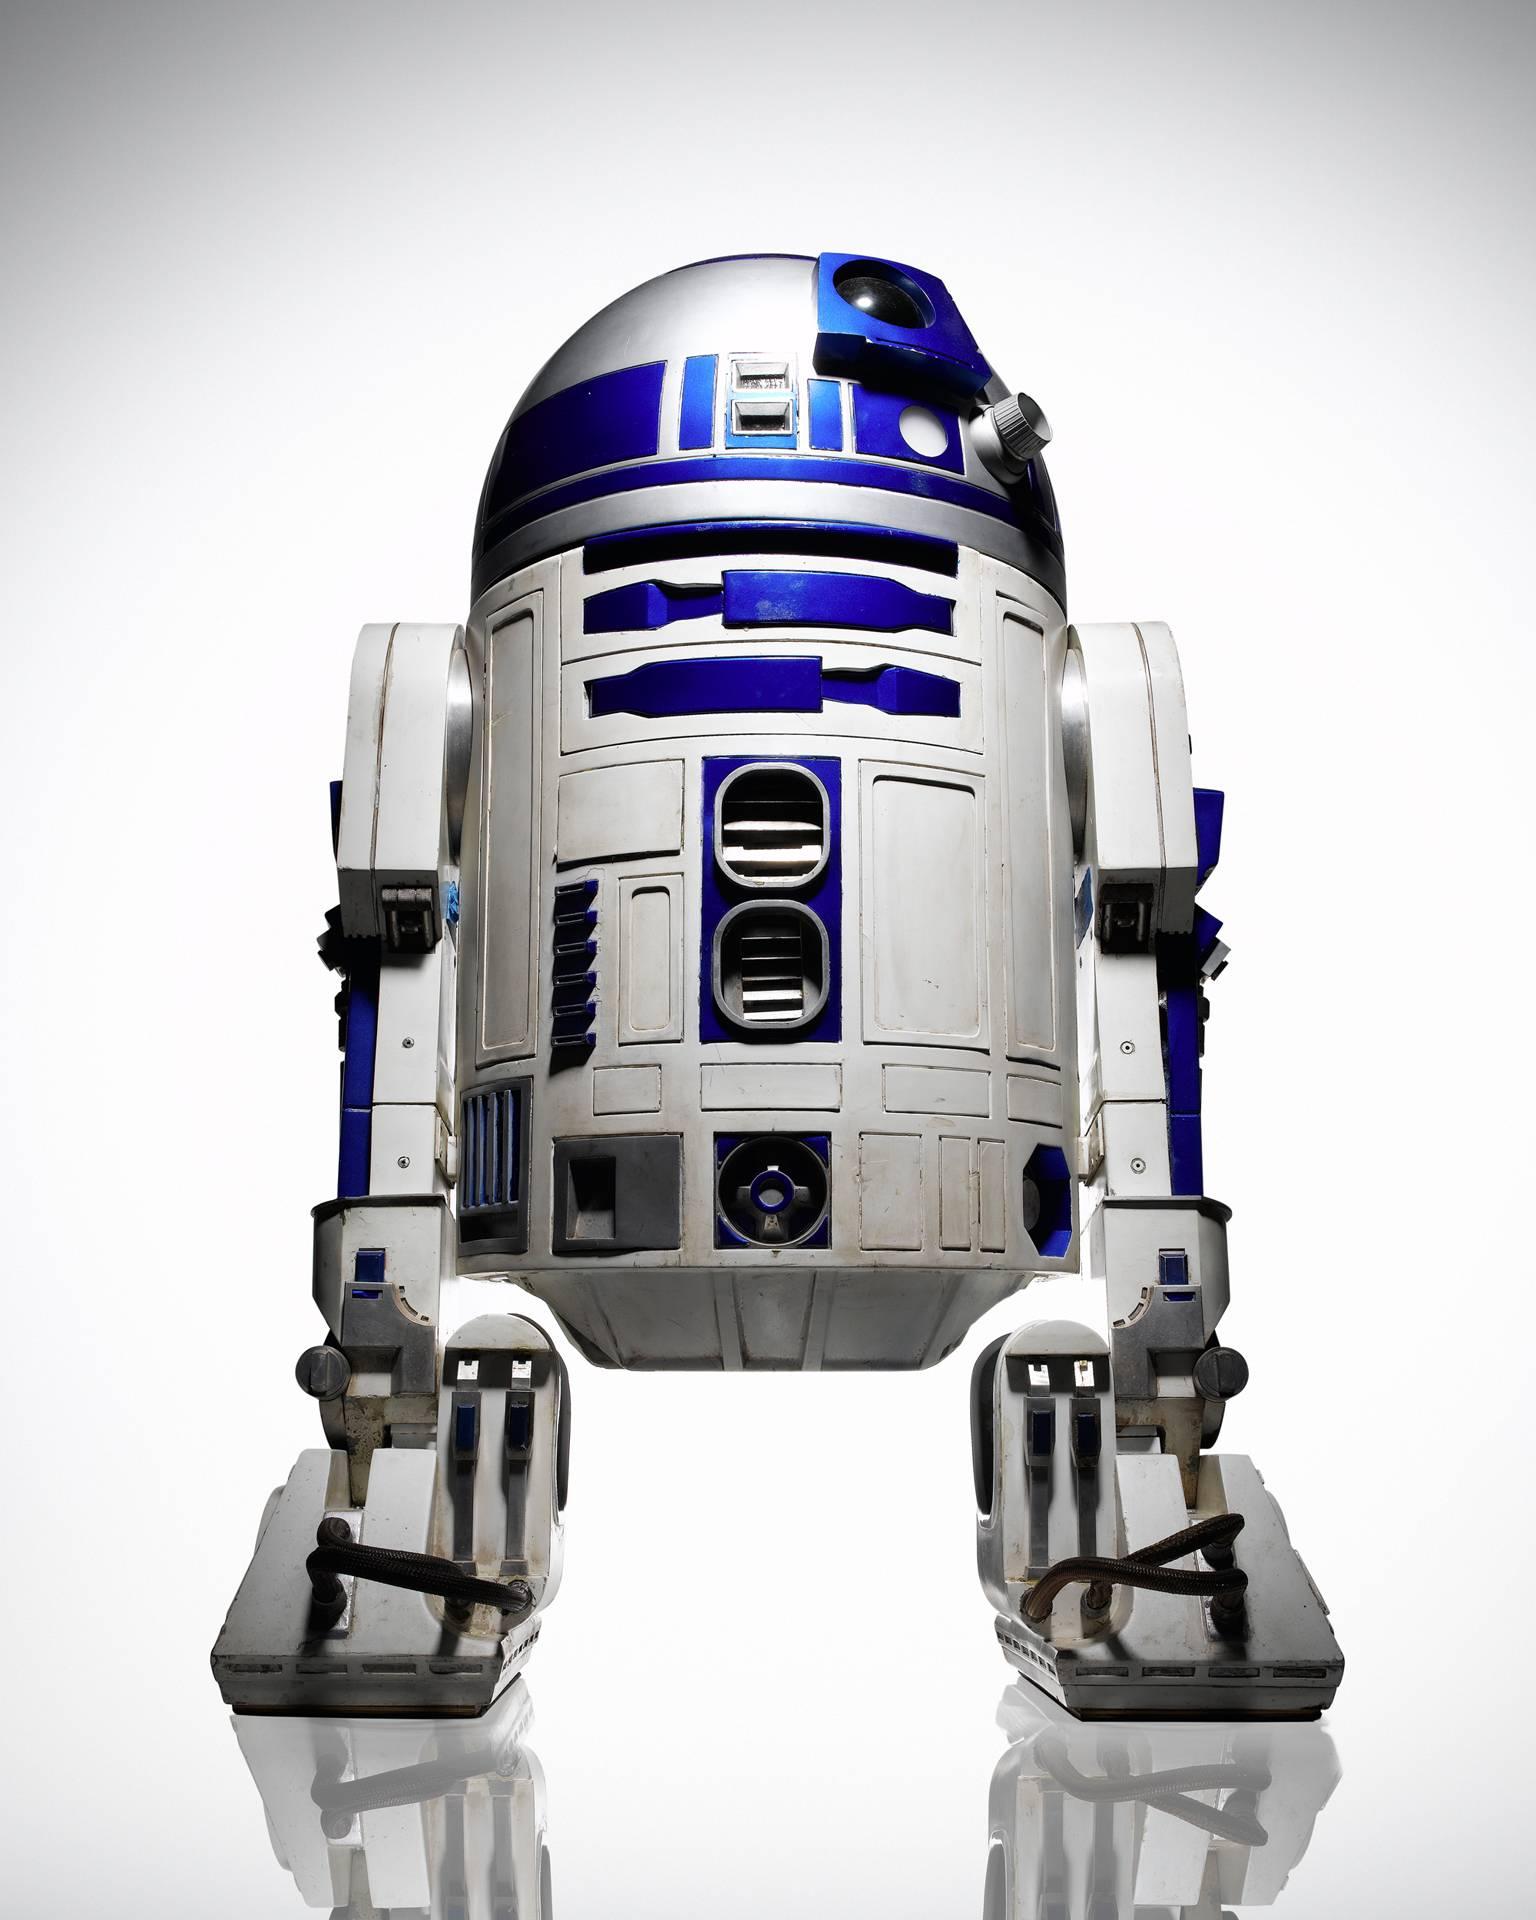 Tom Schierlitz Color Photograph - Star Wars (R2-D2 new) - large format photograph of original iconic droid robot 